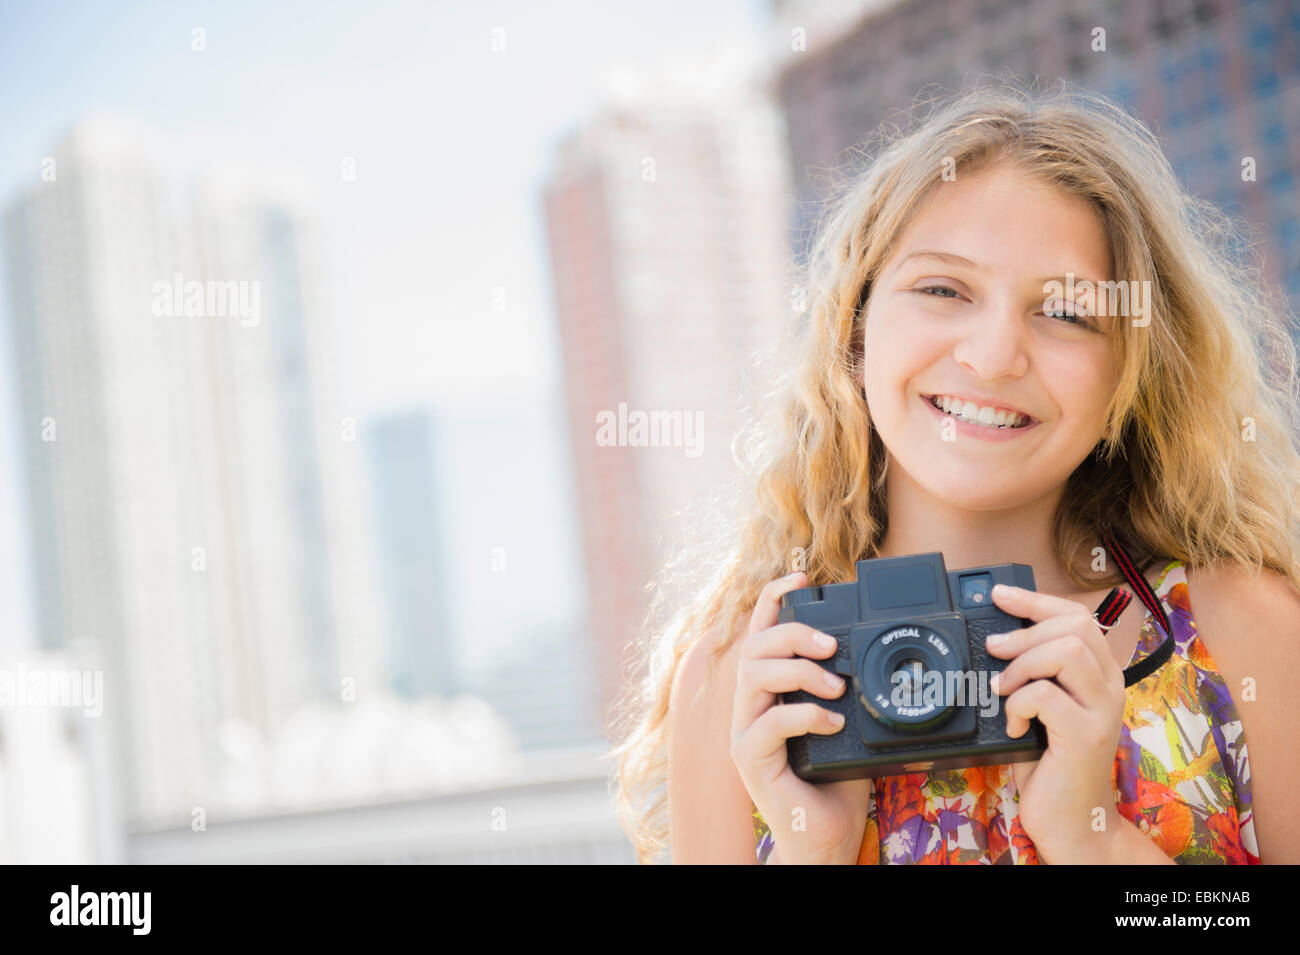 USA, New Jersey, Girl (12-13) holding camera, smiling Stock Photo